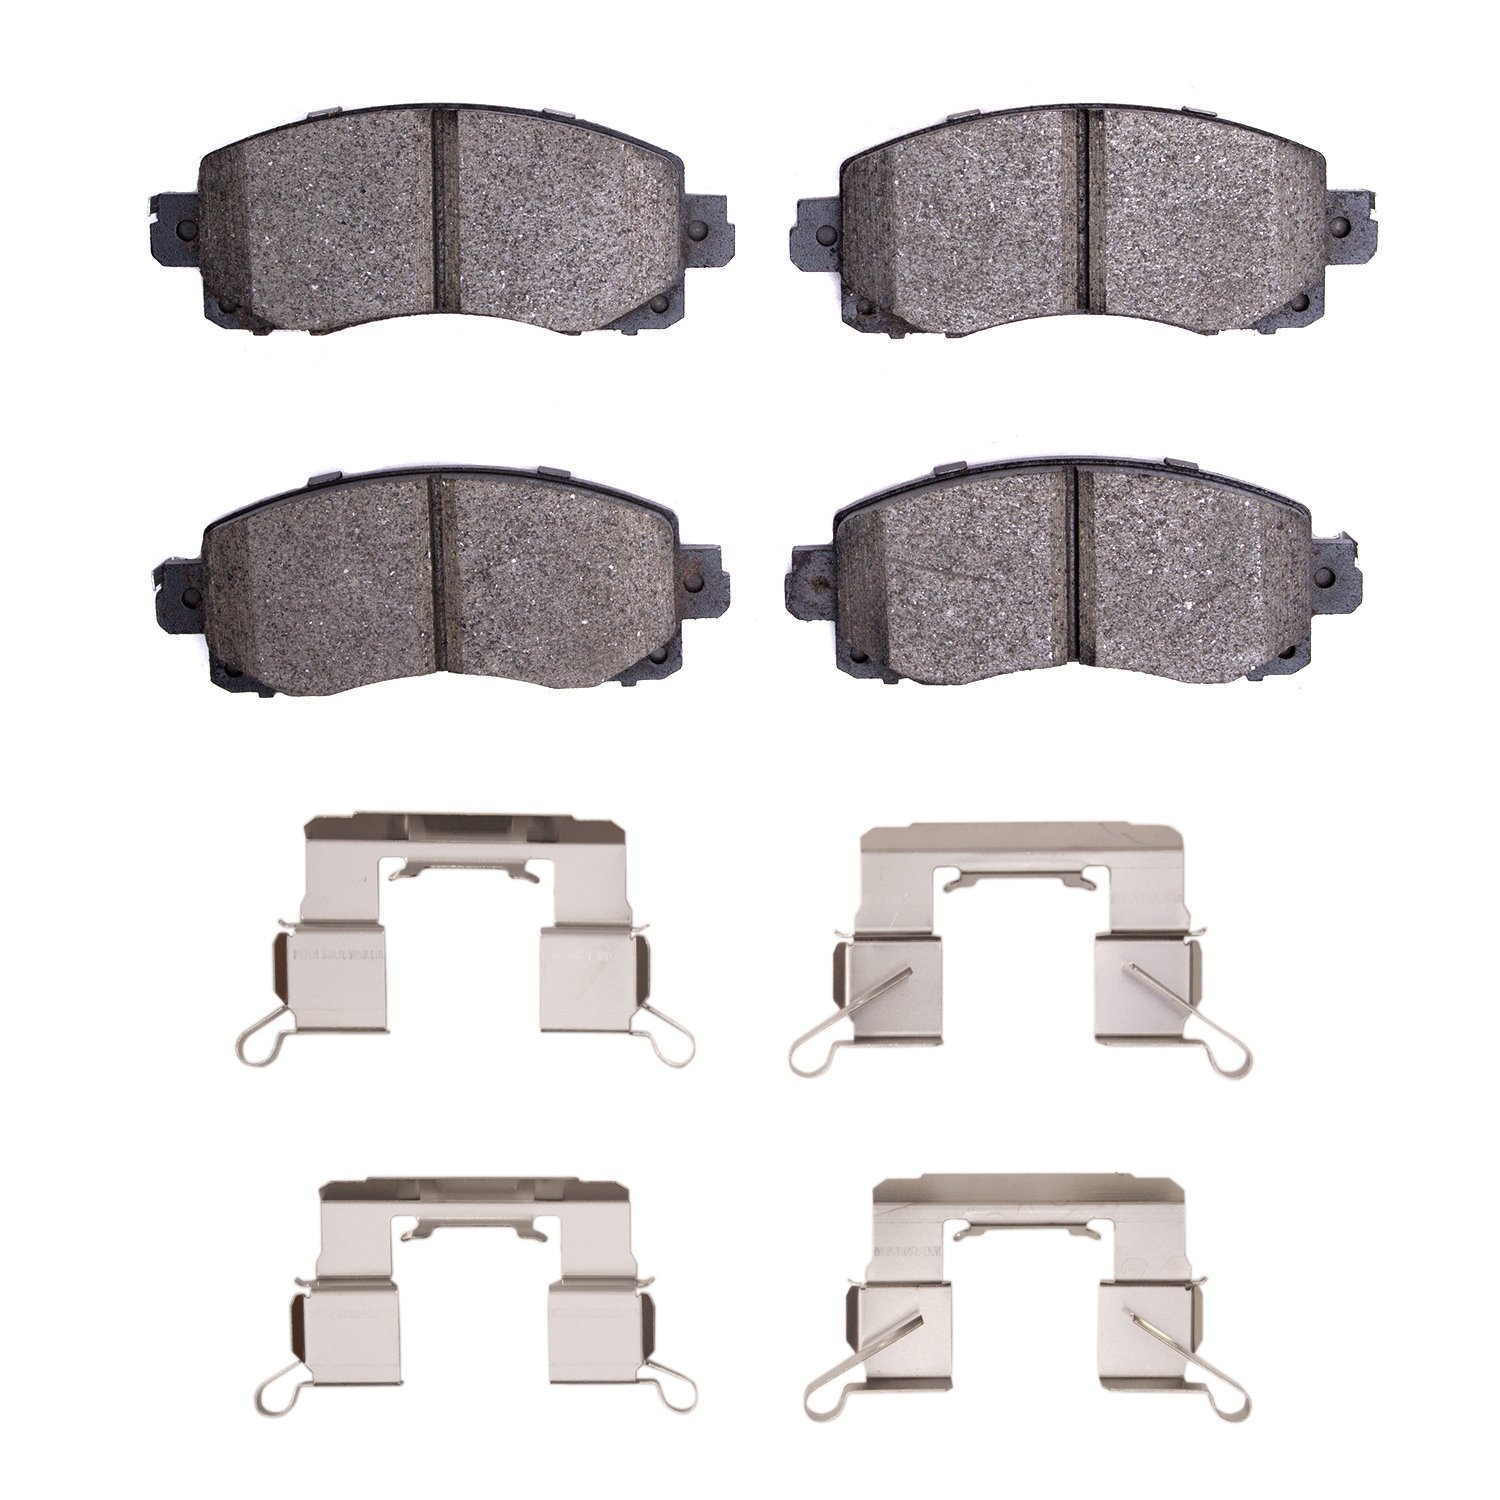 1551-2045-01 5000 Advanced Ceramic Brake Pads & Hardware Kit, Fits Select Subaru, Position: Front